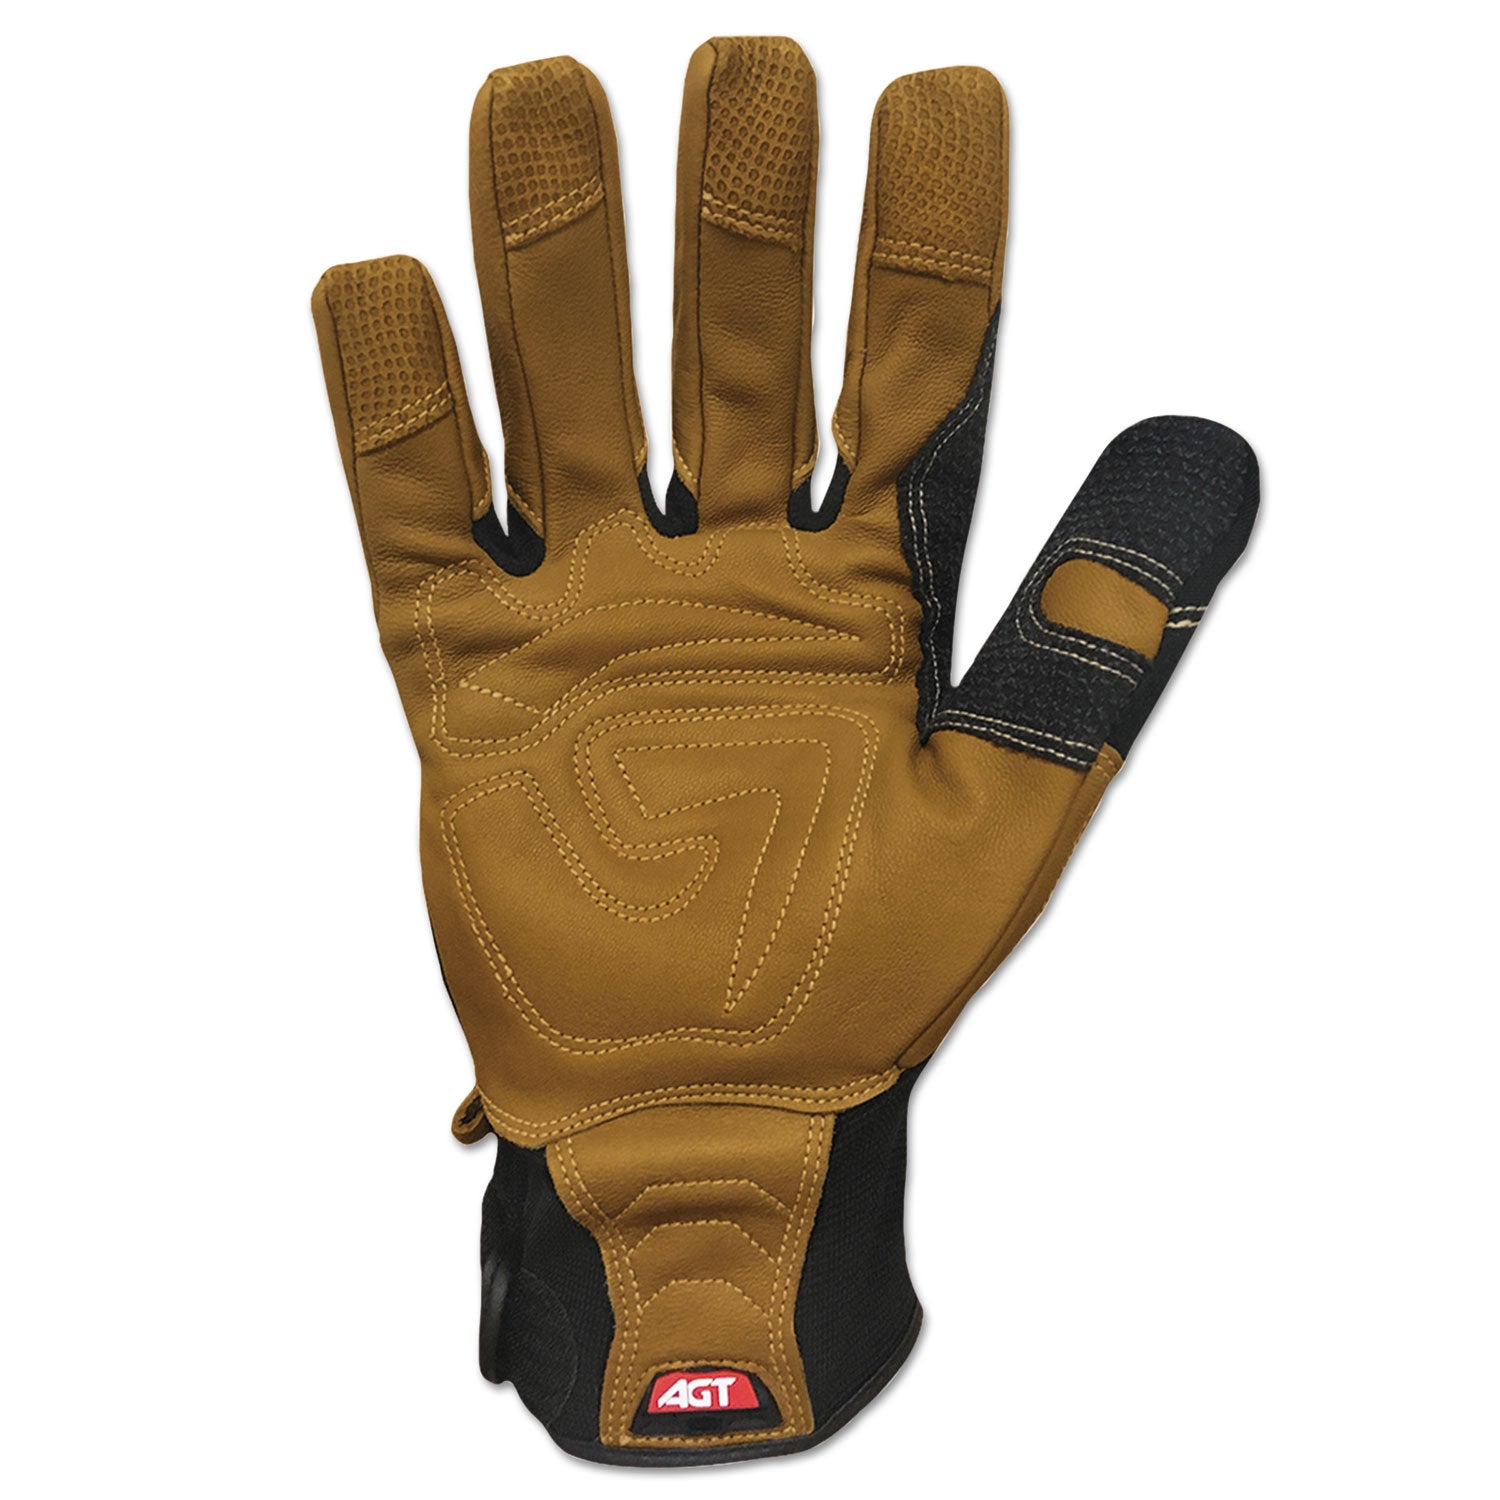 Ranchworx Leather Gloves, Black/Tan, Large - 